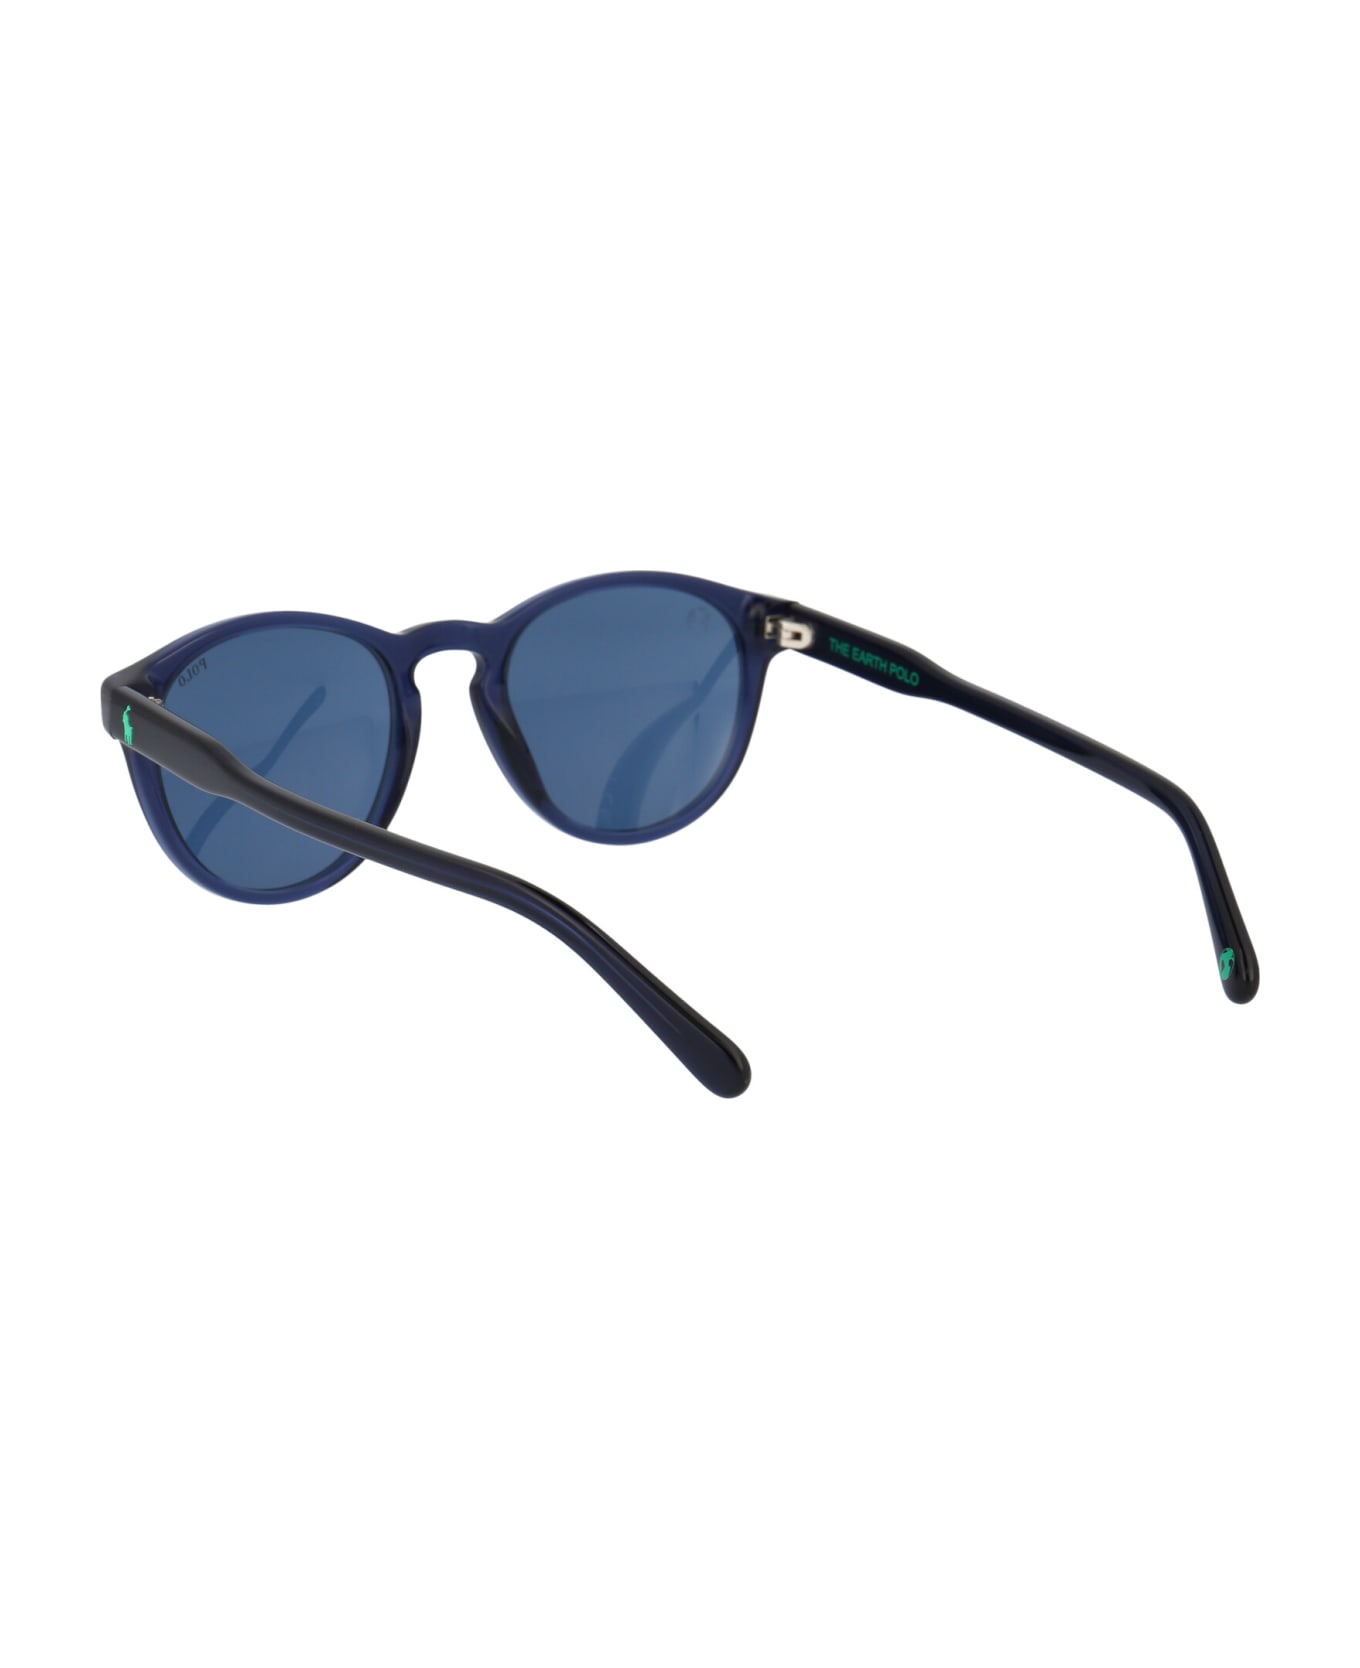 Polo Ralph Lauren 0ph4172 Sunglasses - 595580 SHINY TRANSPARENT BLUE